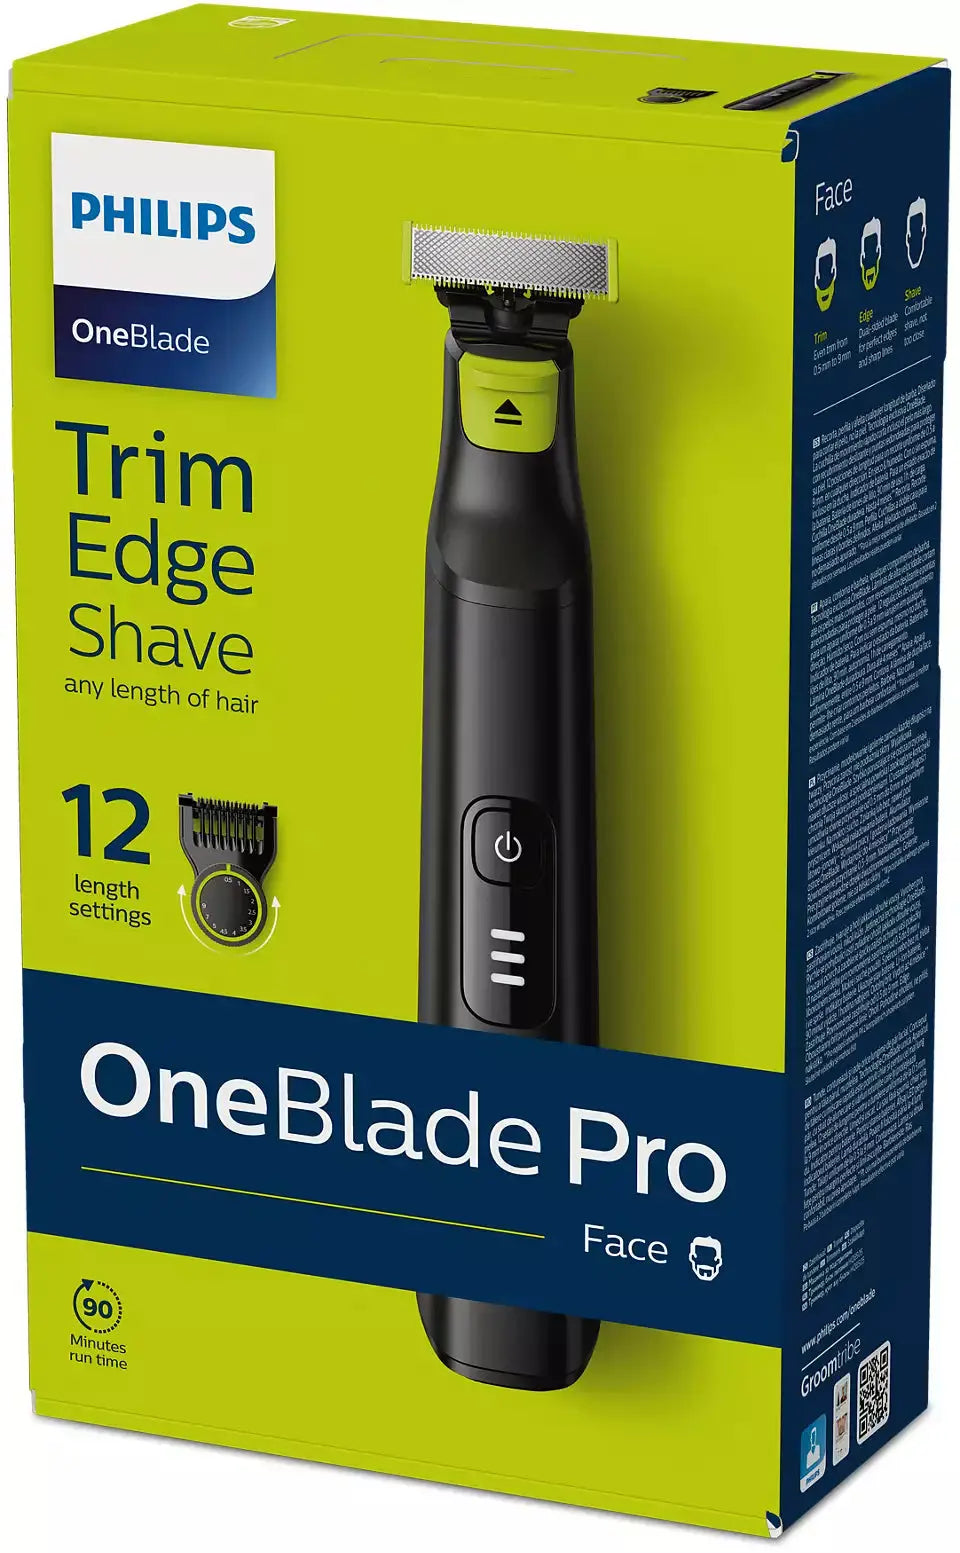 Philips Oneblade Pro QP6530 rasoir / tondeuse barbe - gilette